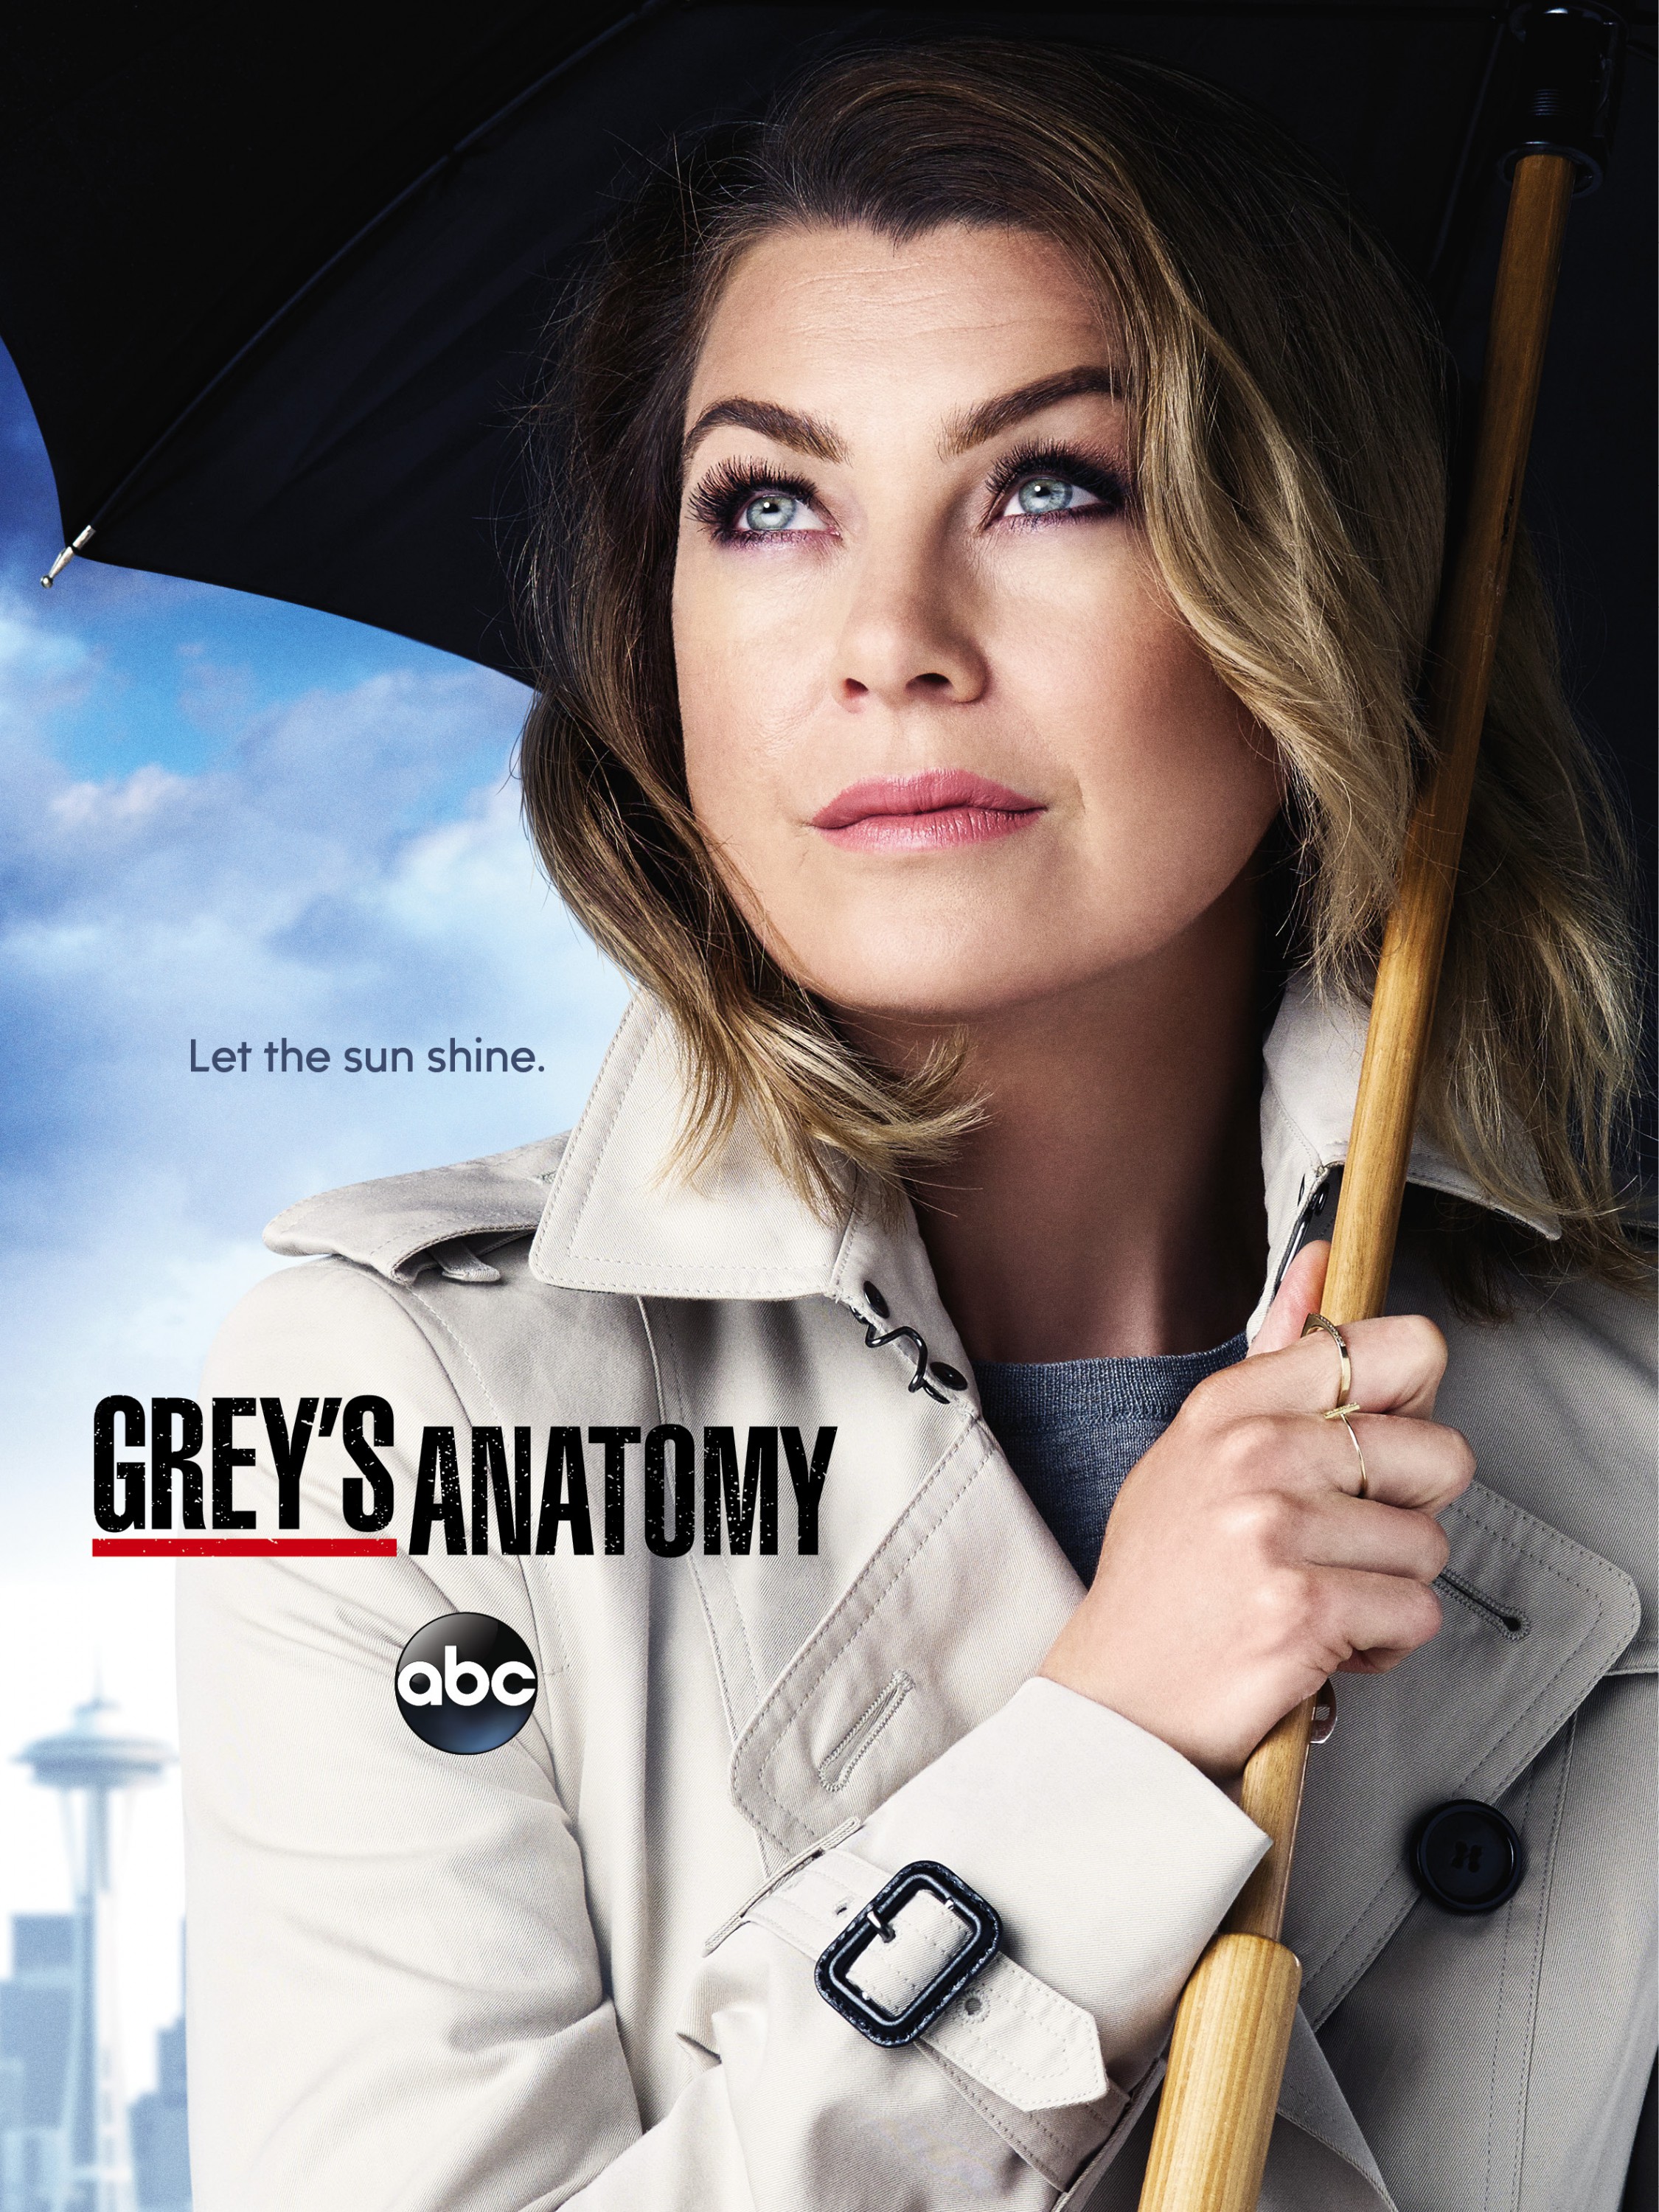 Grey's Anatomy (season 12) - Wikipedia